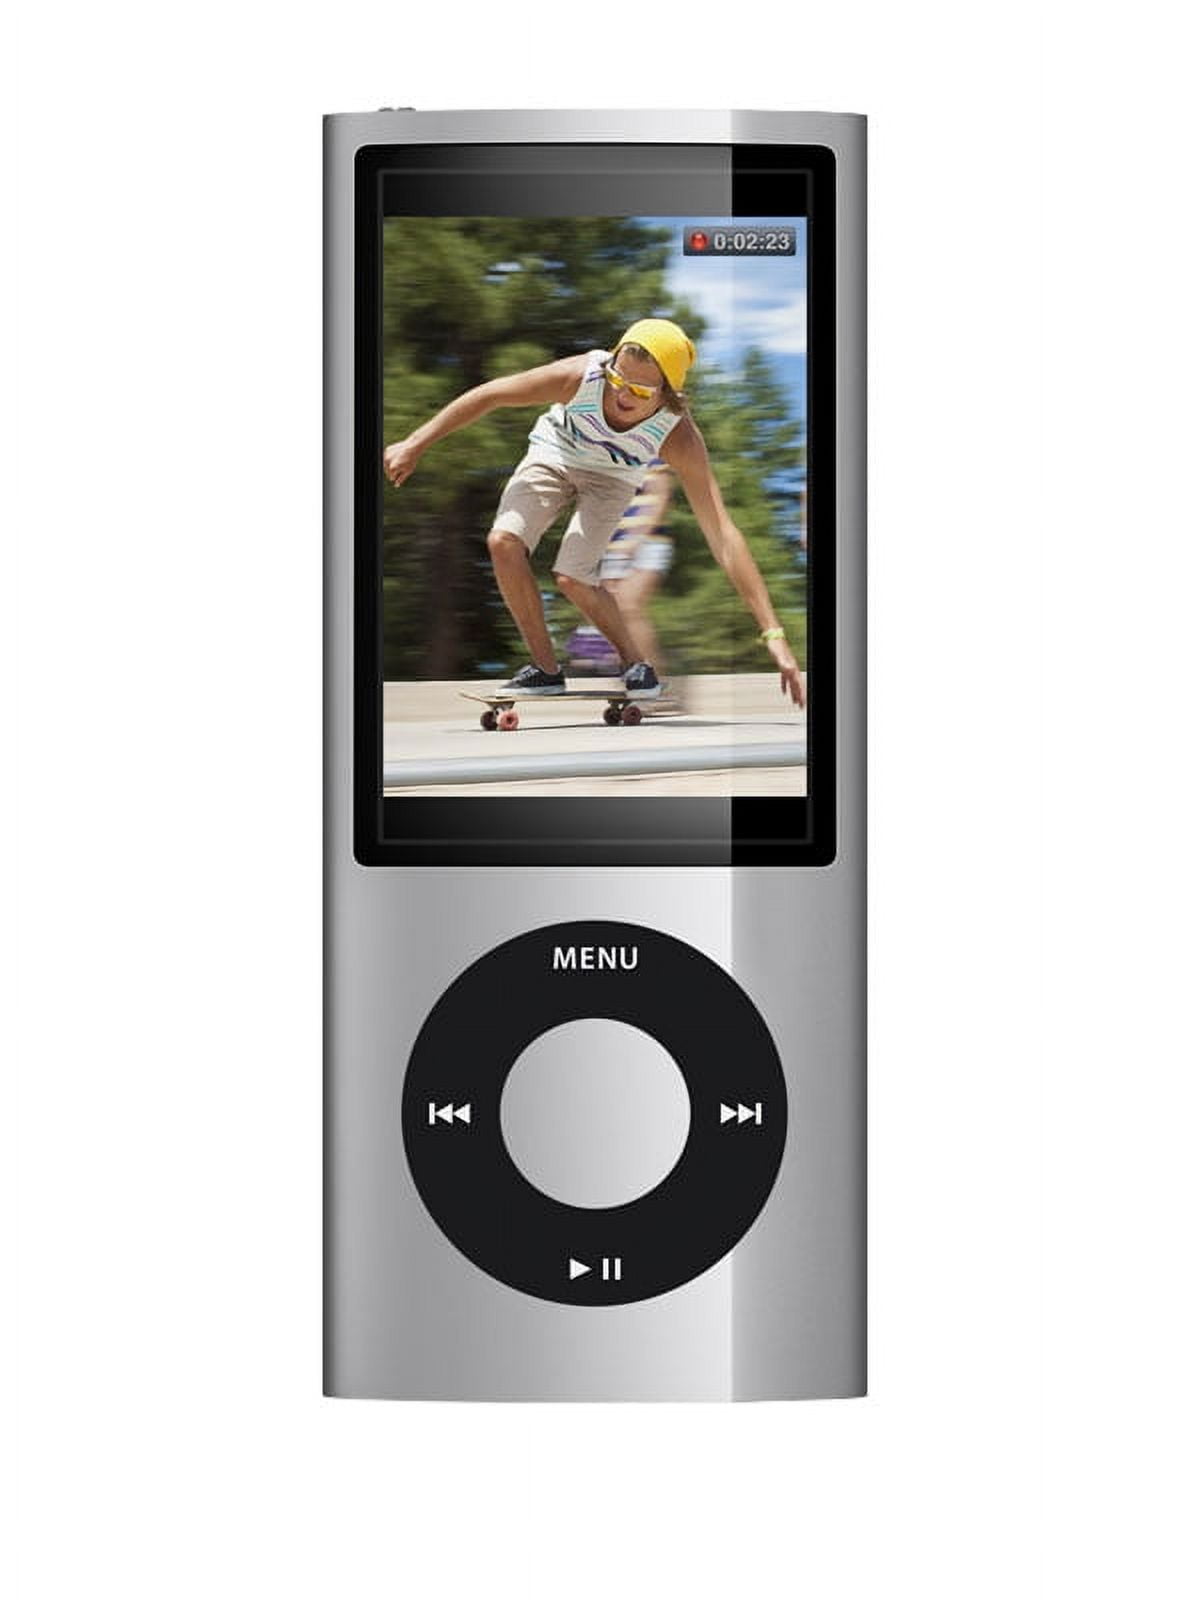 Apple iPod Nano 5th Generation 8GB Silver Refurbished